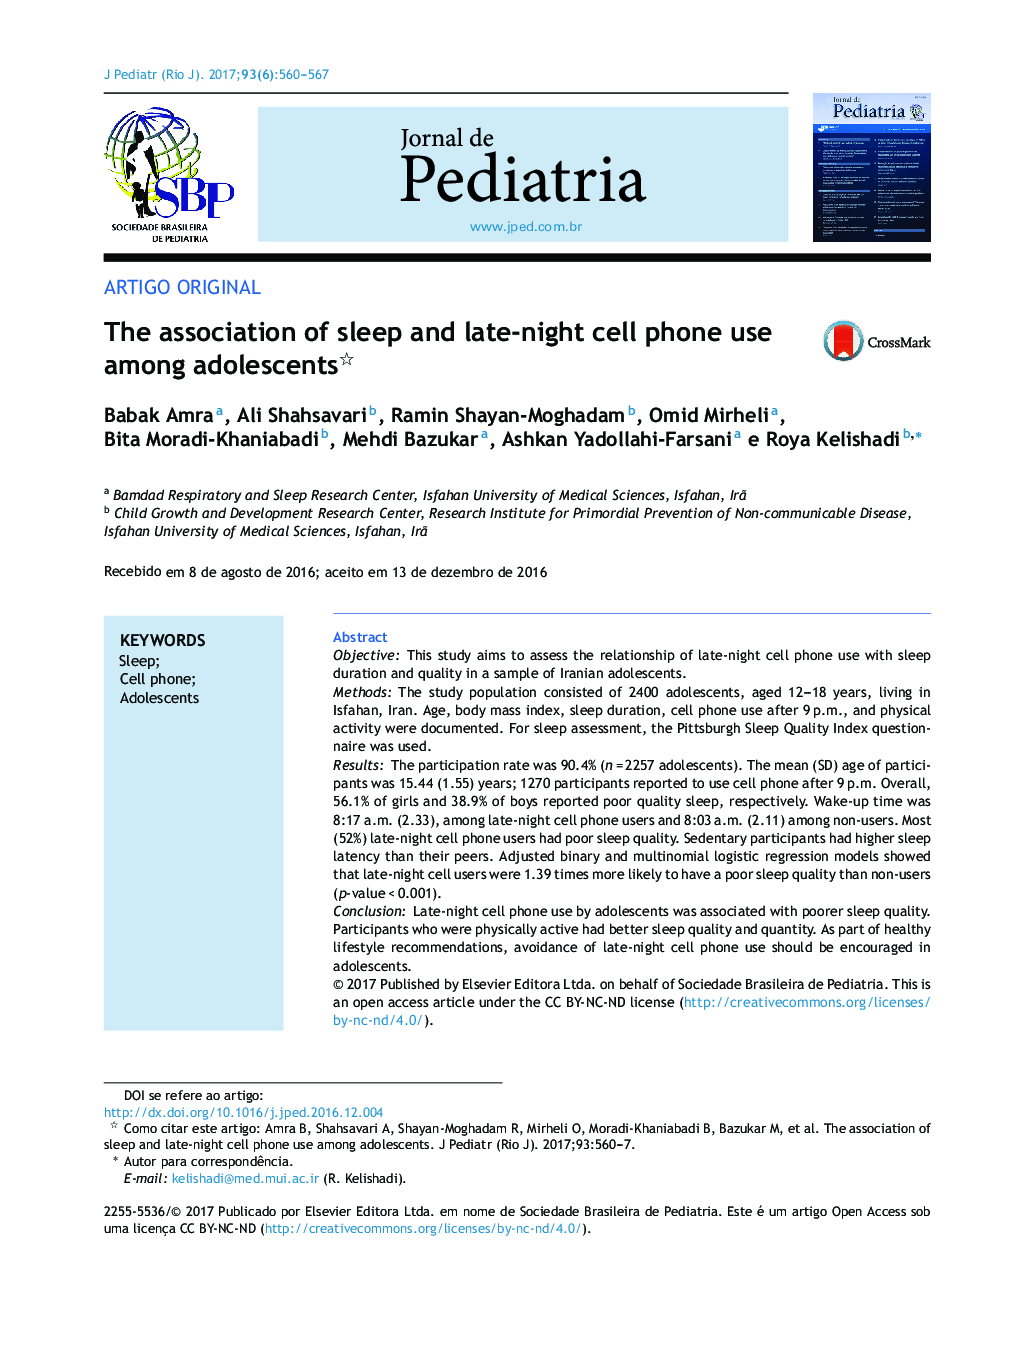 The association of sleep and lateânight cell phone use among adolescents